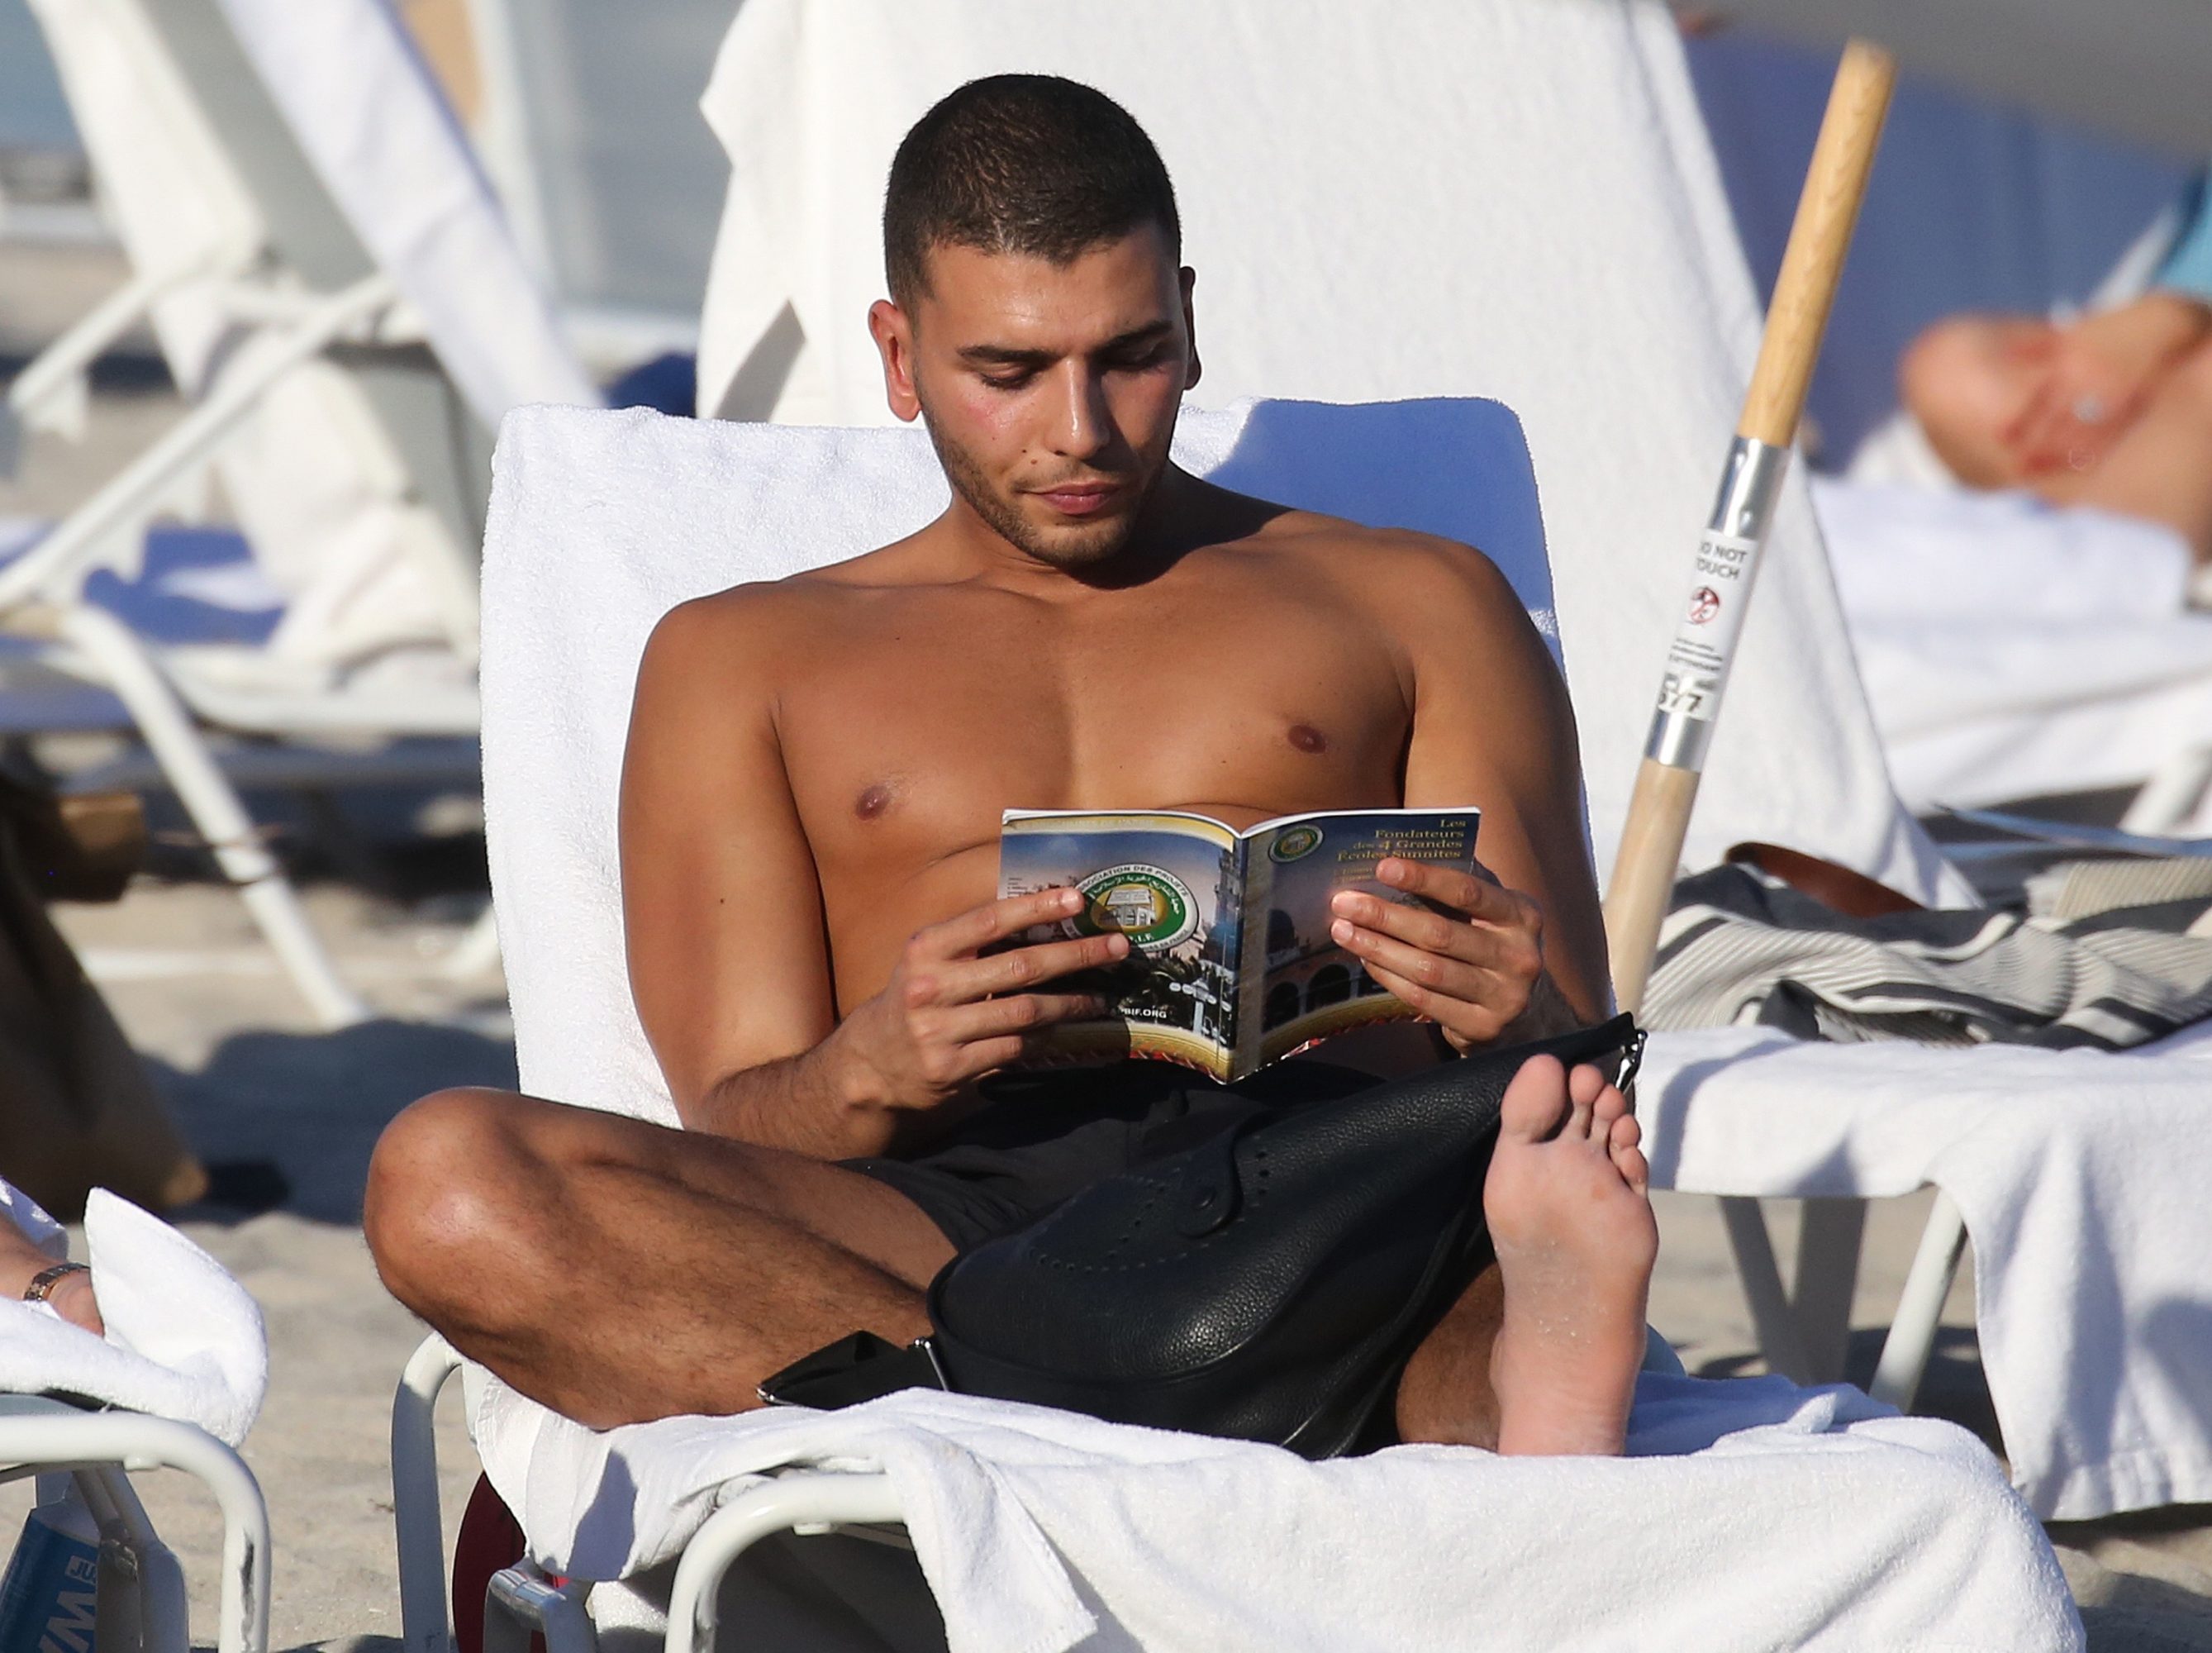 French Nude Beach Contest - Younes Bendjima Reads Shirtless Amid Renewed Romance With Kourtney